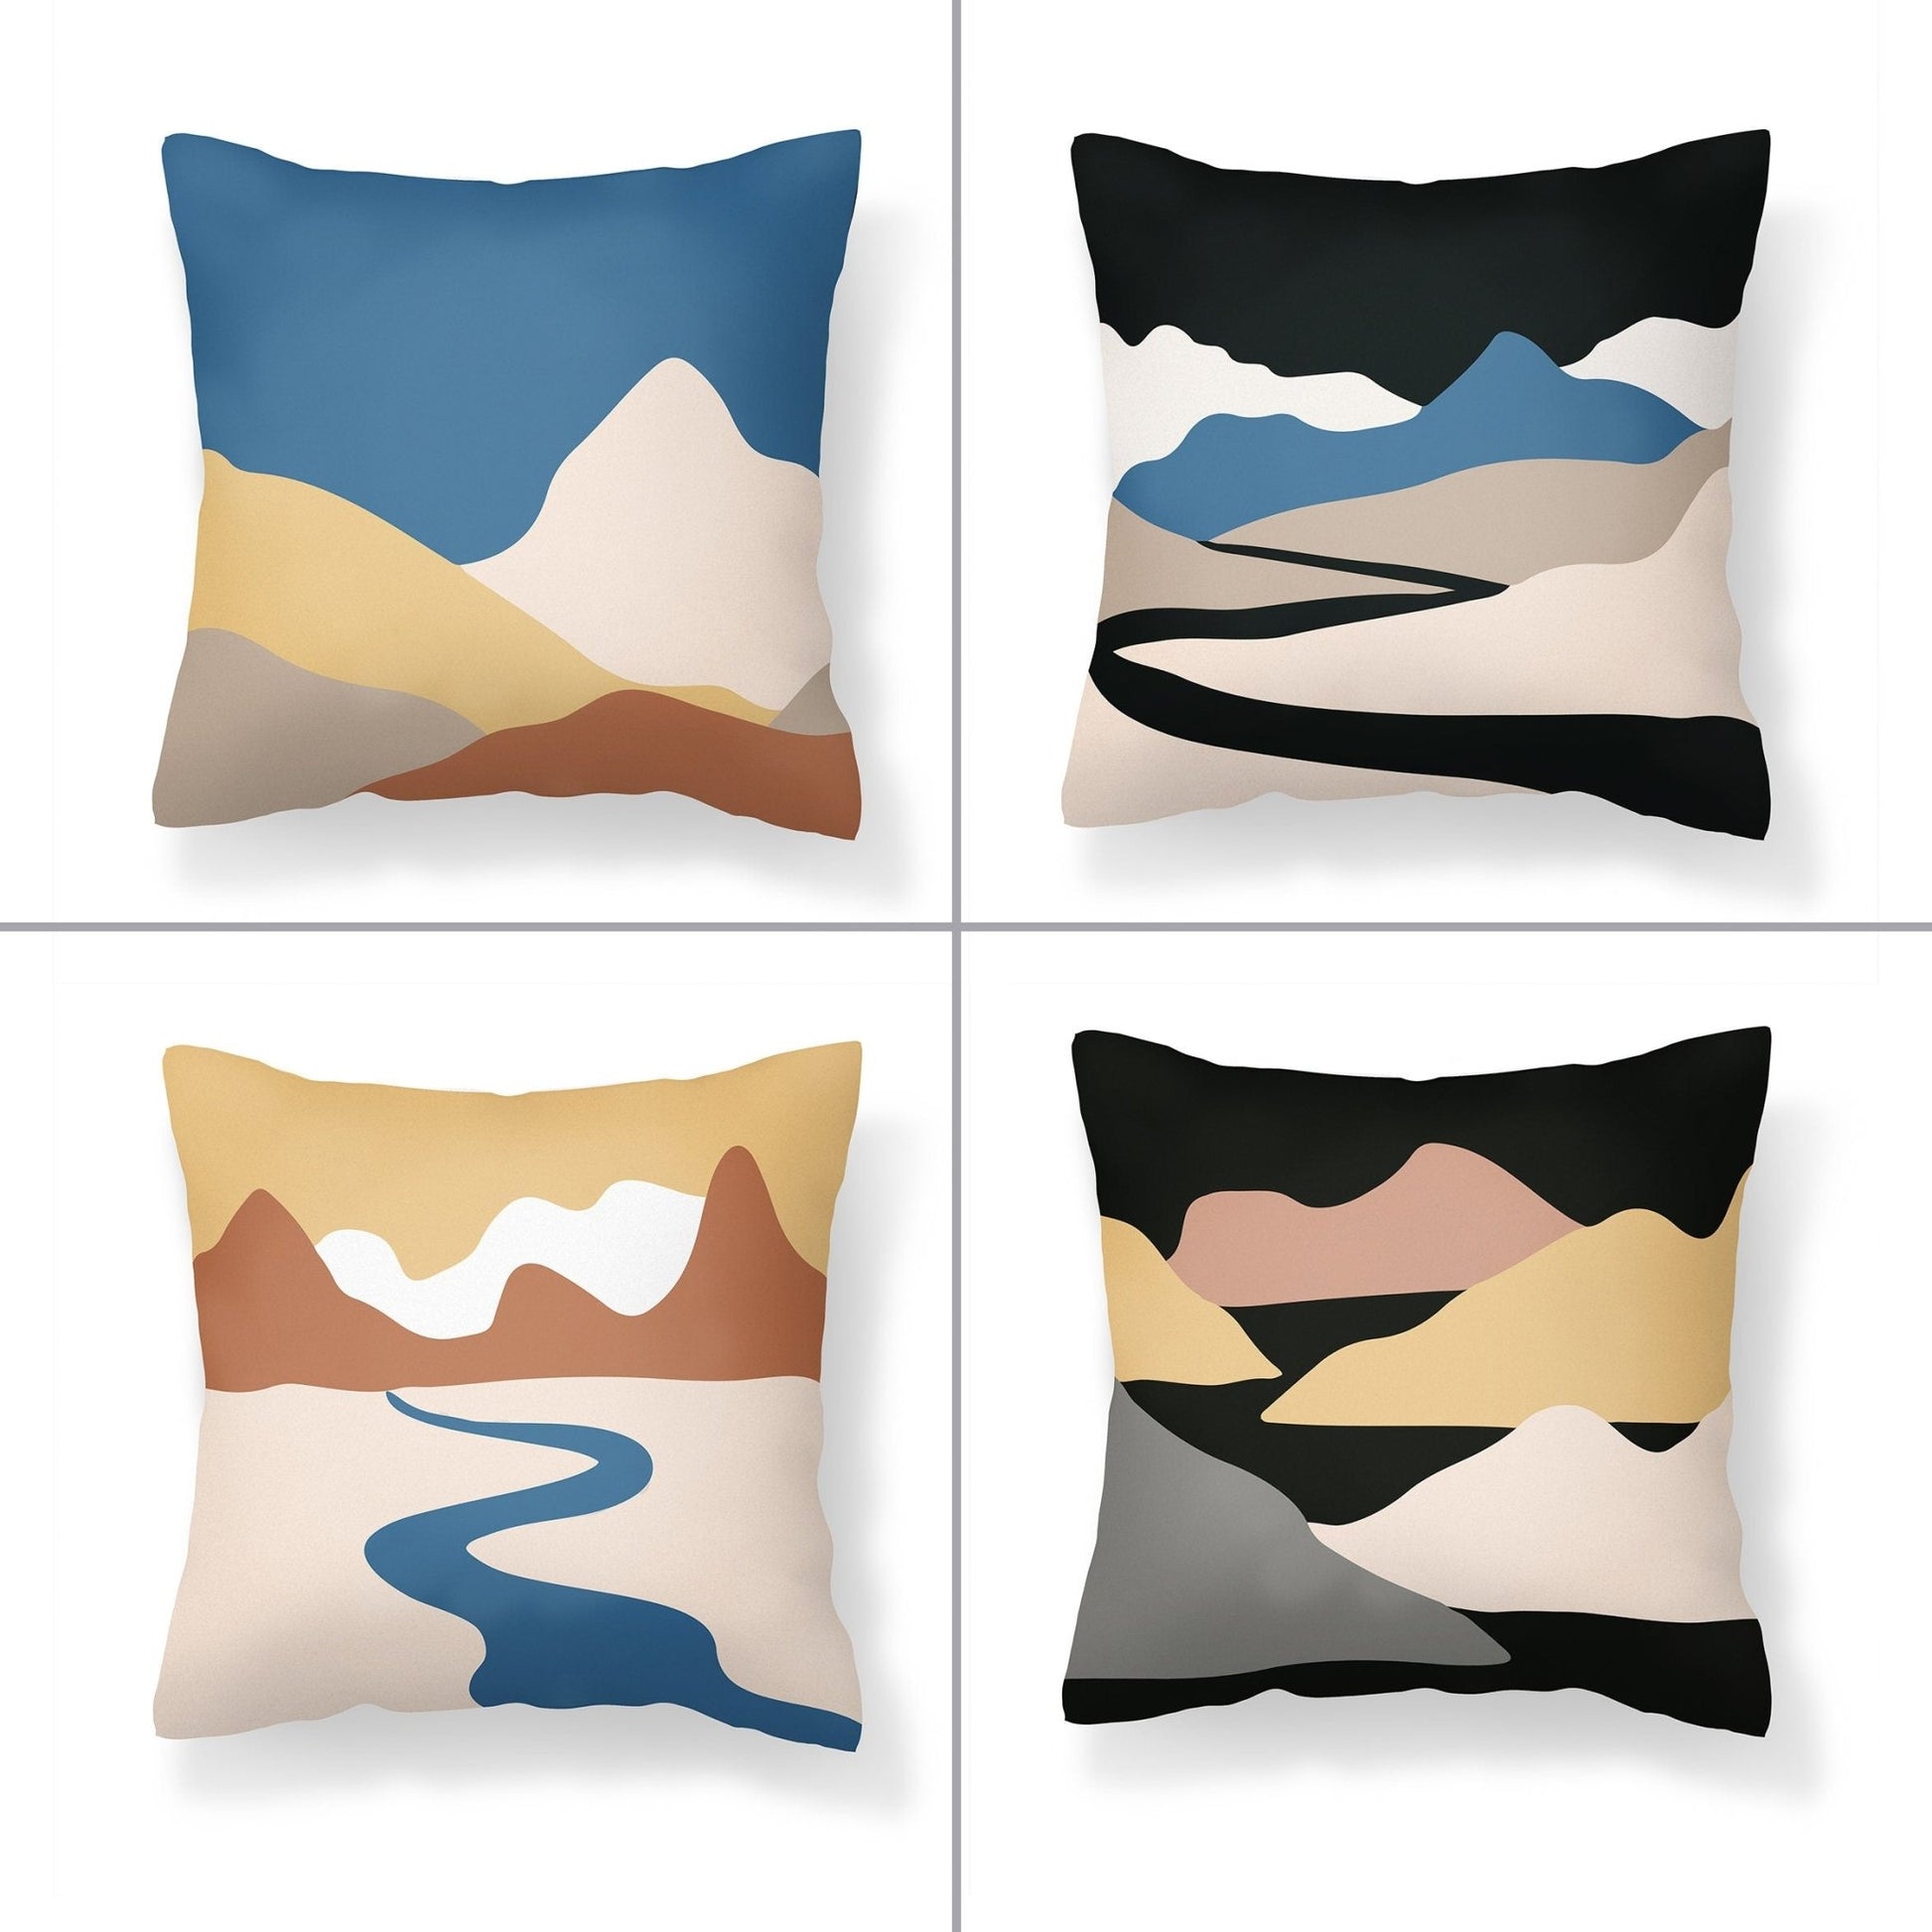 Desert Throw Pillow Covers - Mix and Match - Throw Pillows